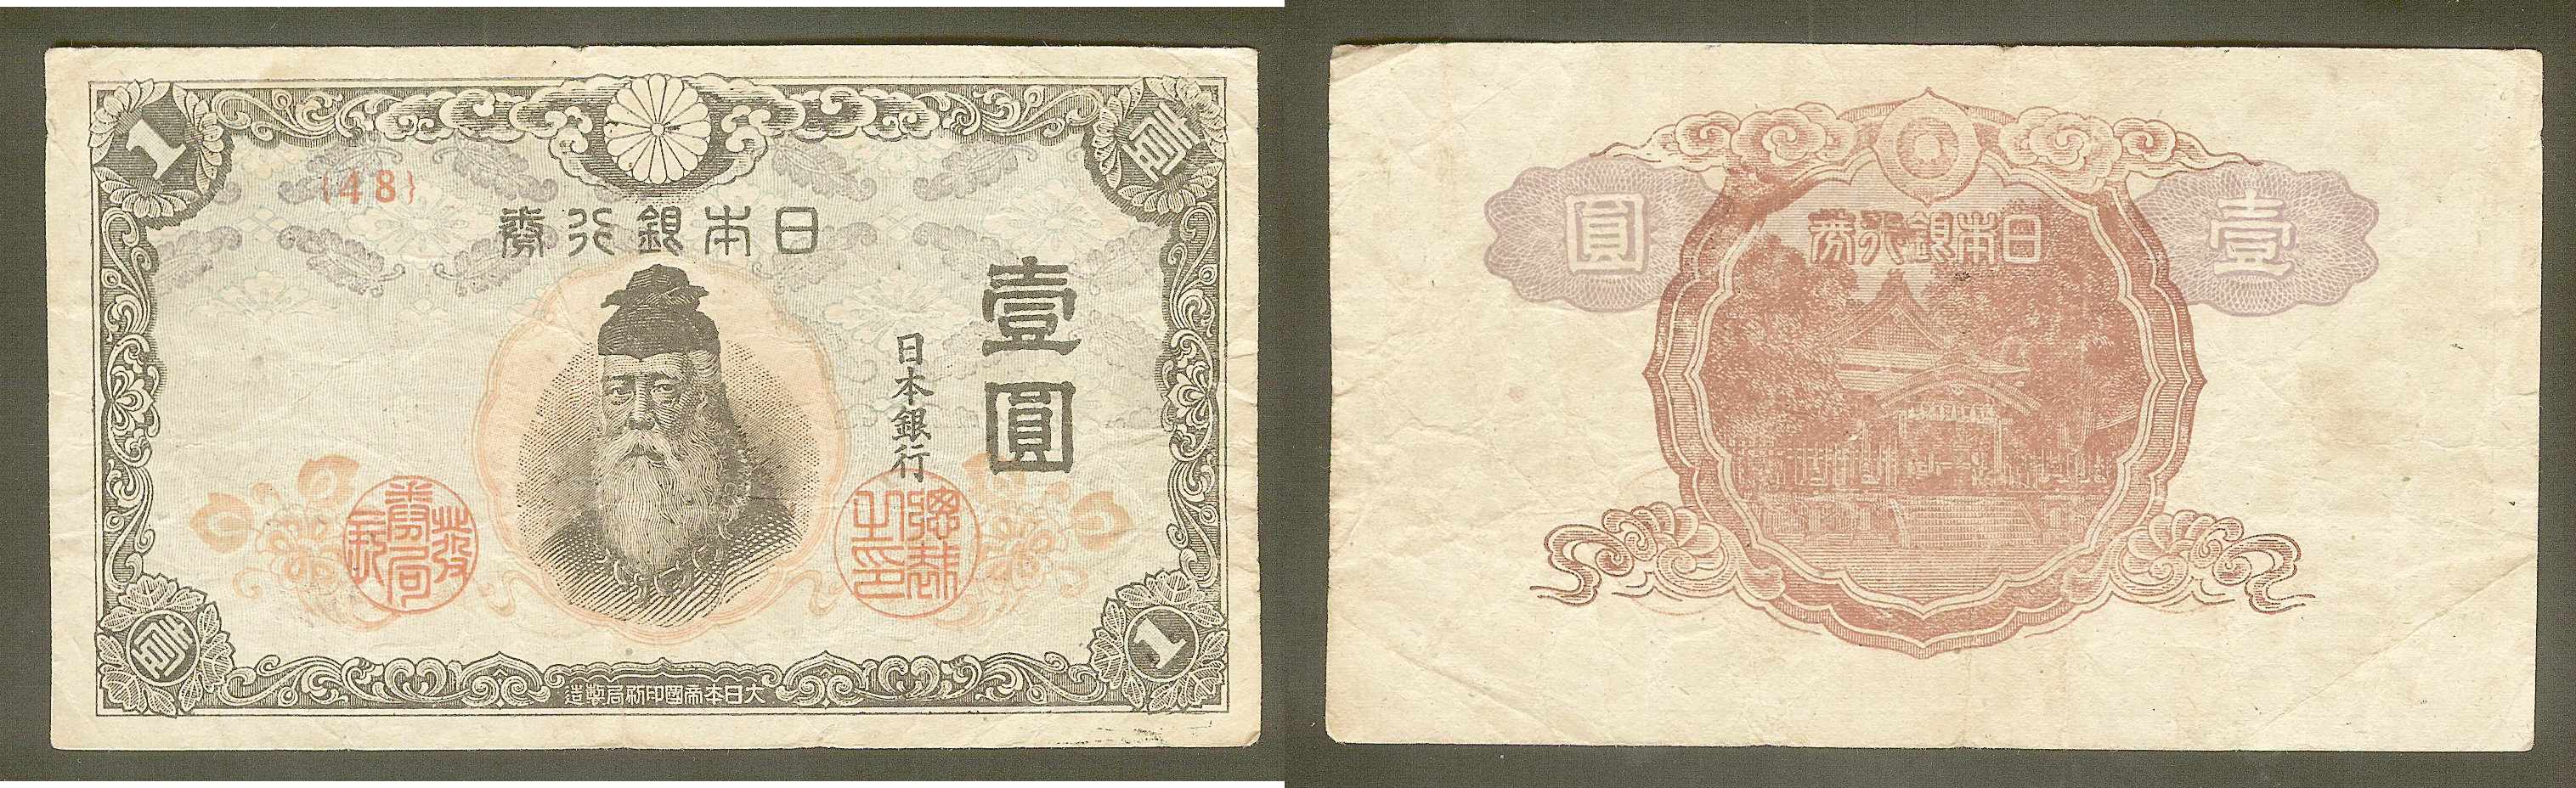 JAPON 1 Yen 1943 TB+